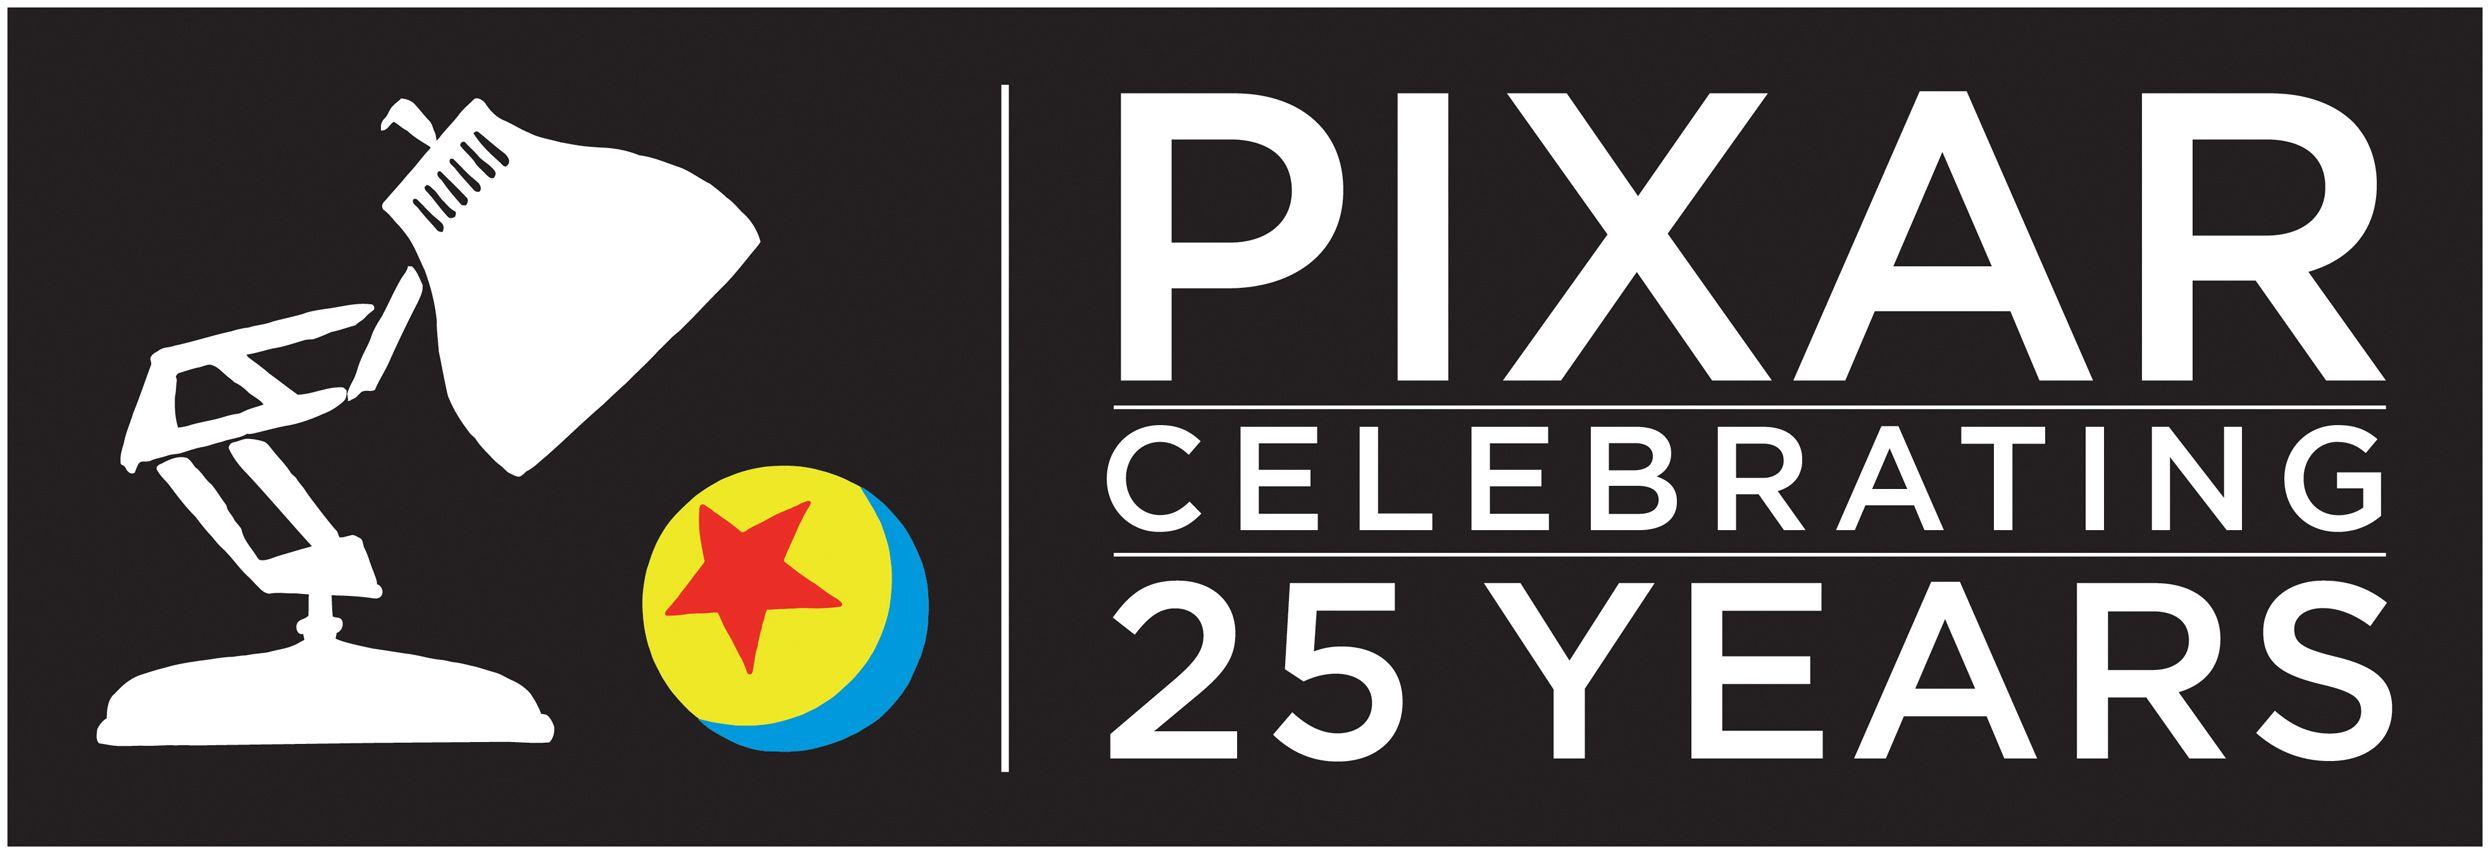 Disney Pixar Logo - First Look: Pixar 25th Anniversary Logo